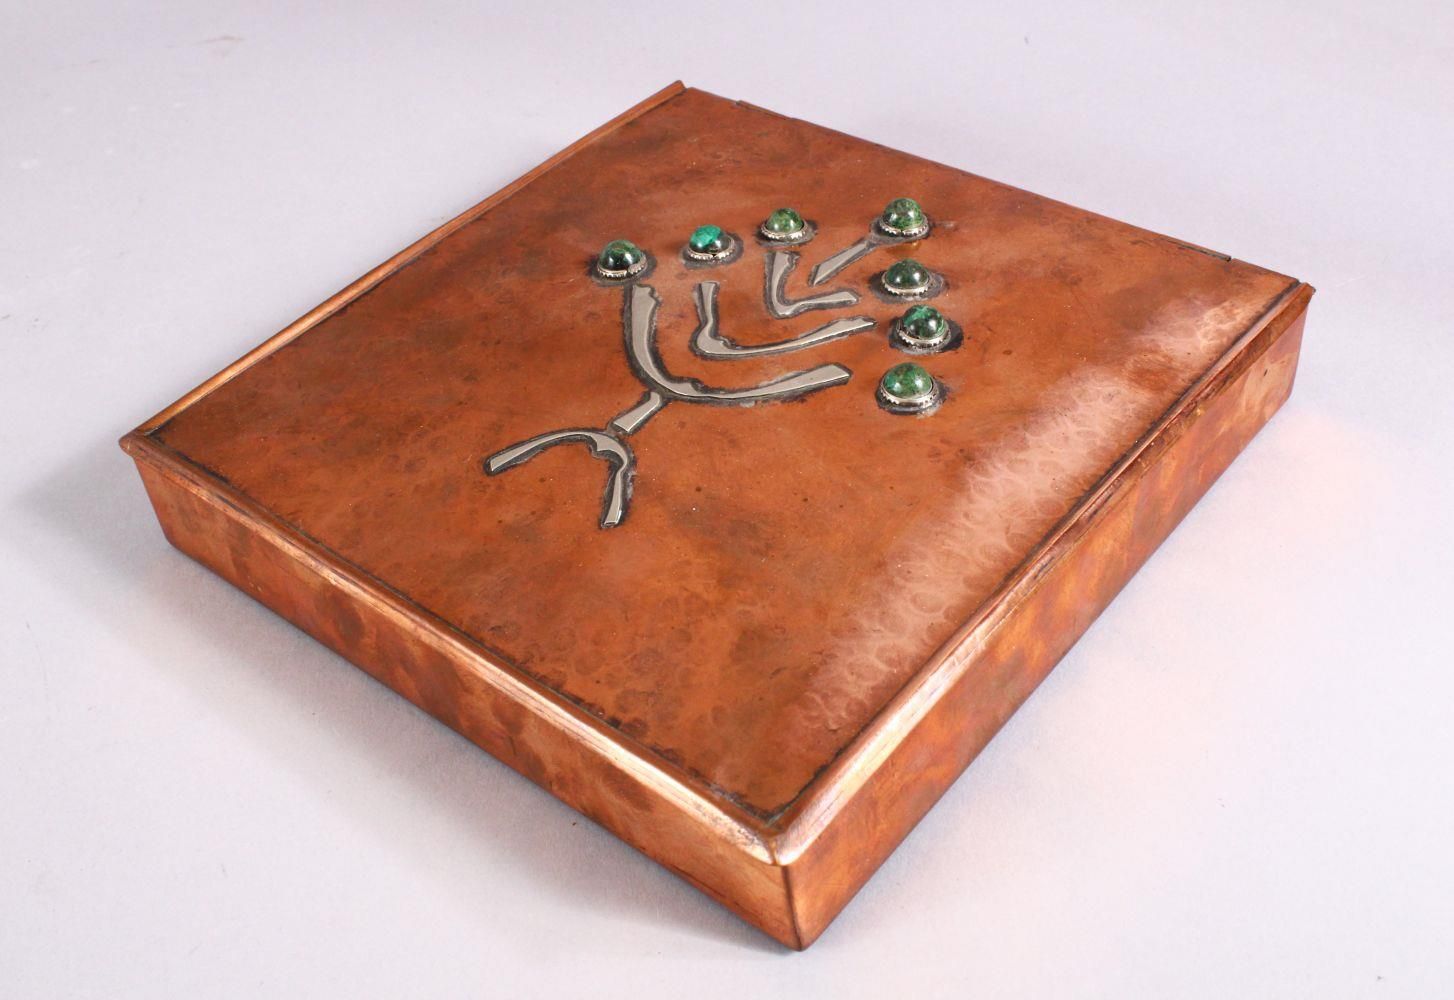 A JEWISH COPPER INLAID SILVER & STONE LIDDED MIRROR BOX, inlaid with silver and semi precious